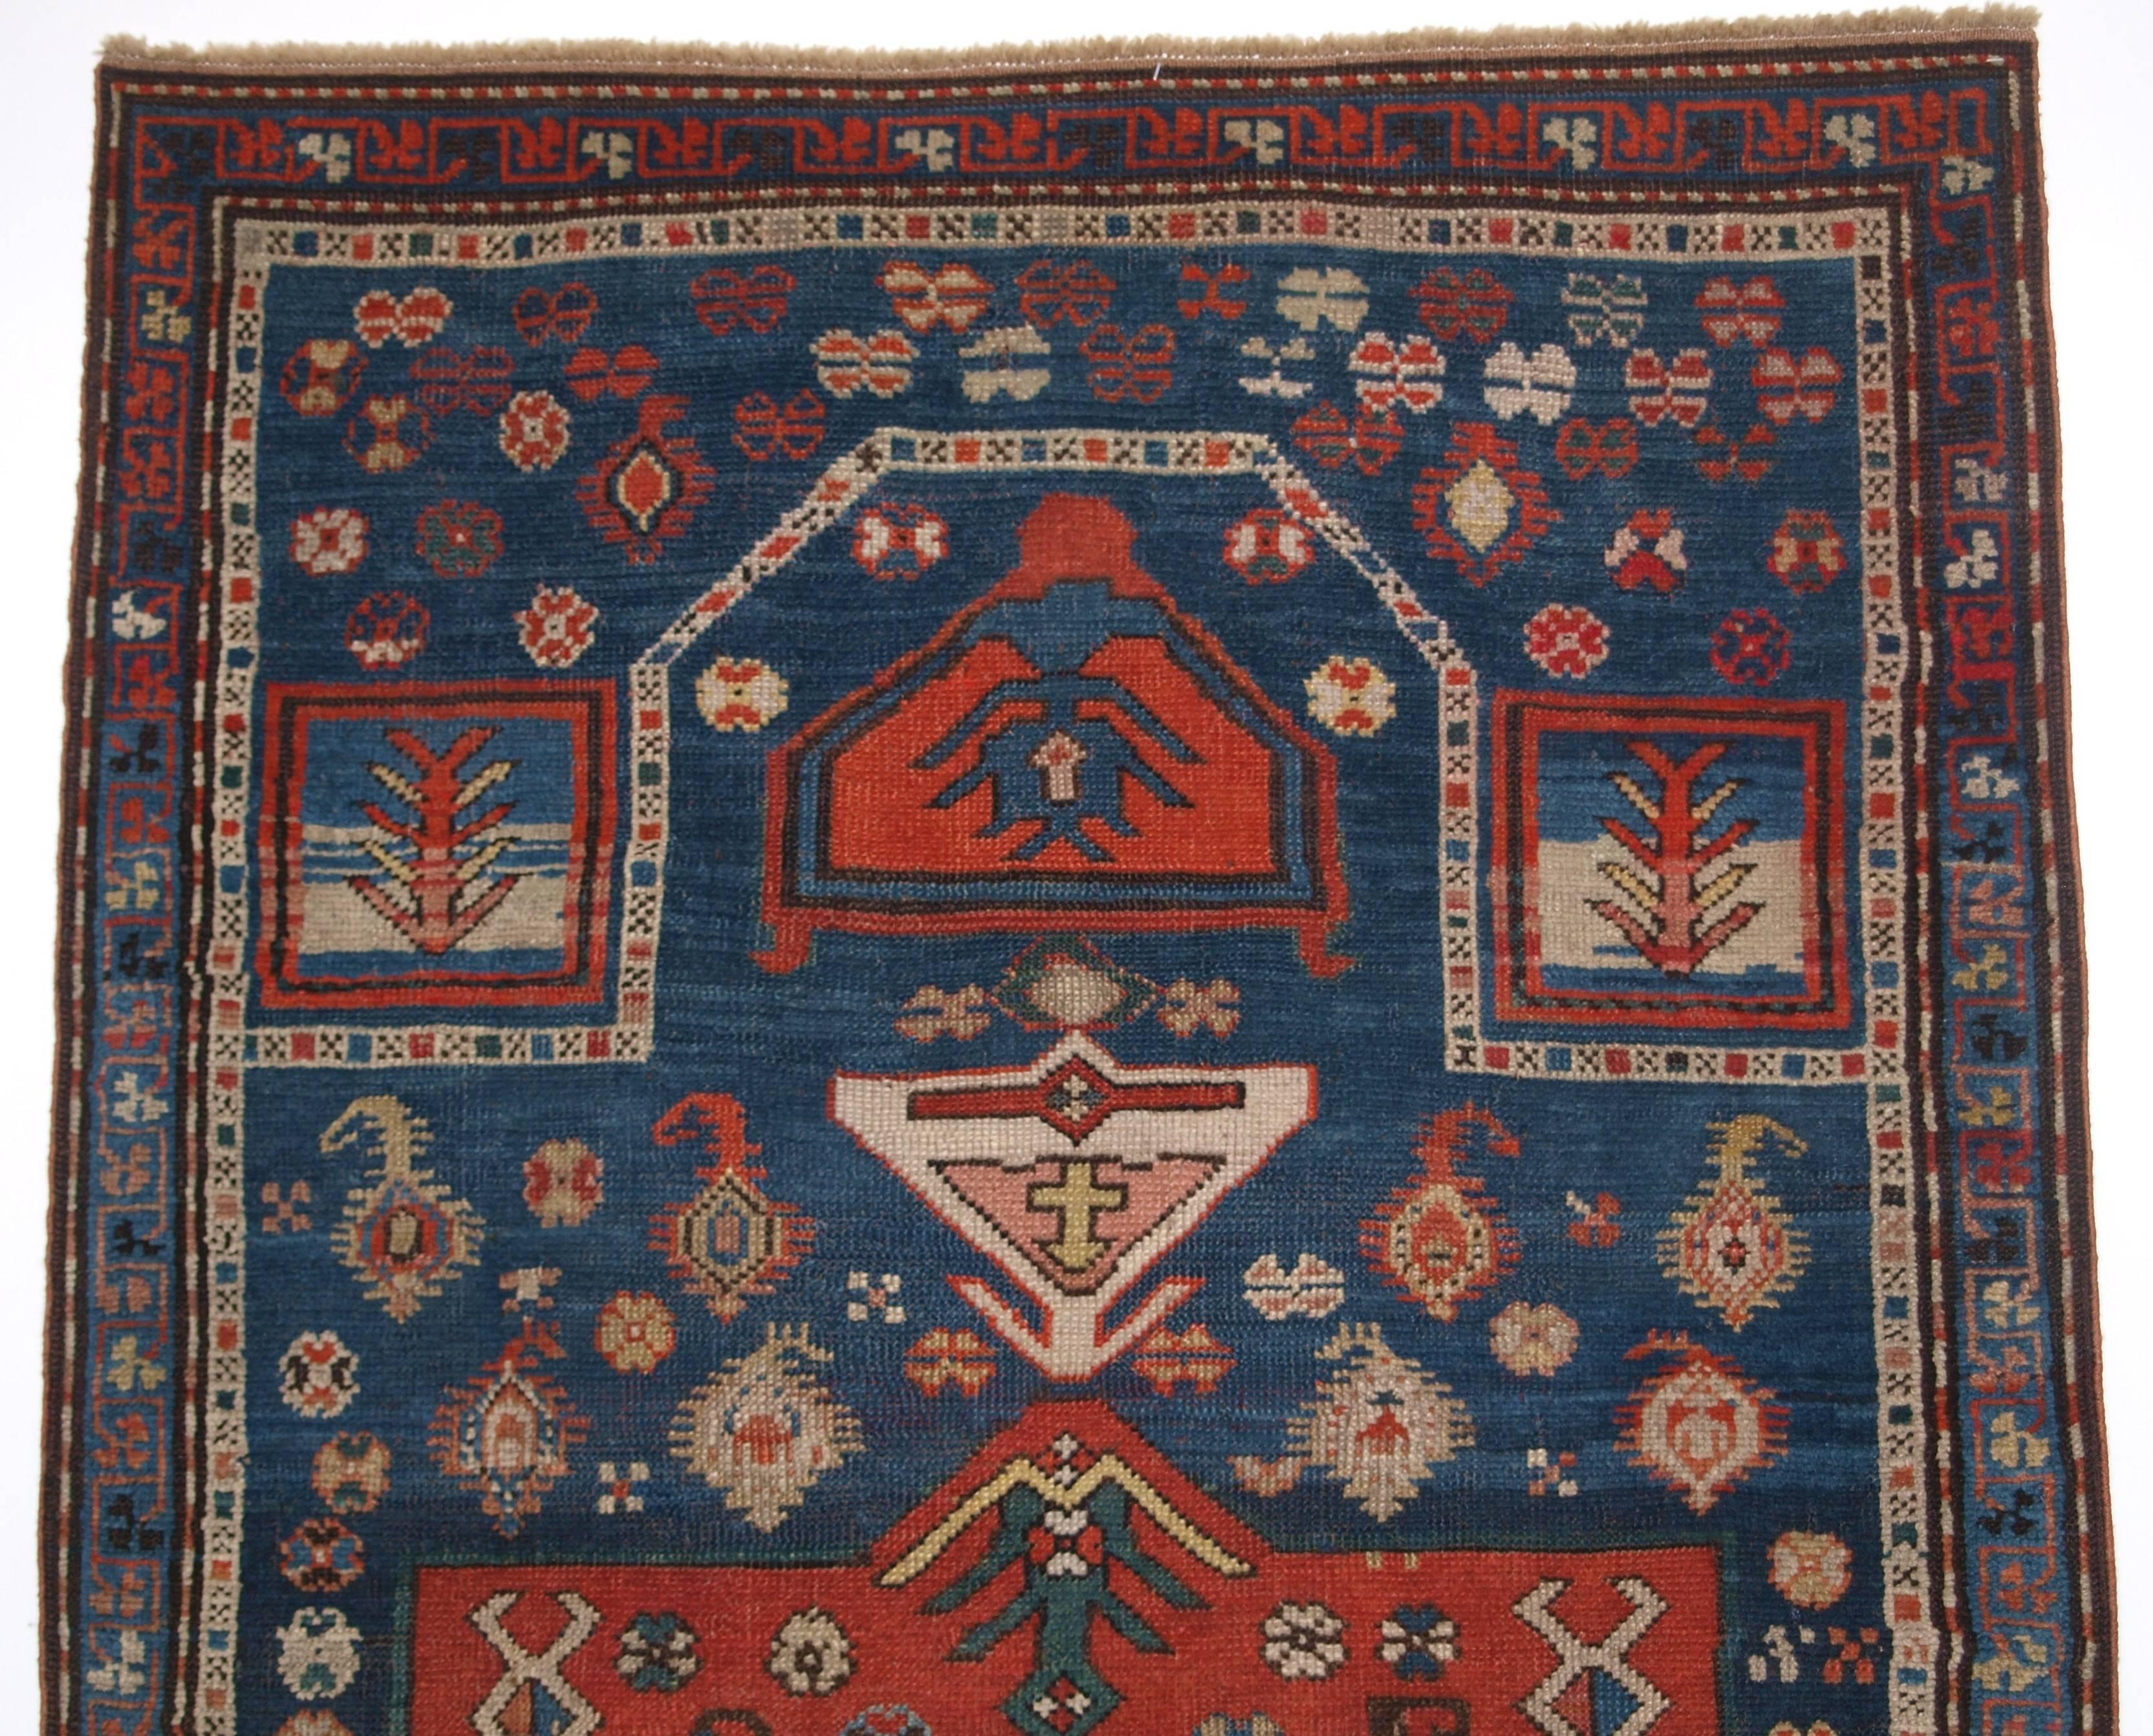 Wool Antique Caucasian Prayer Rug, Karabagh Region of Scarce Design For Sale